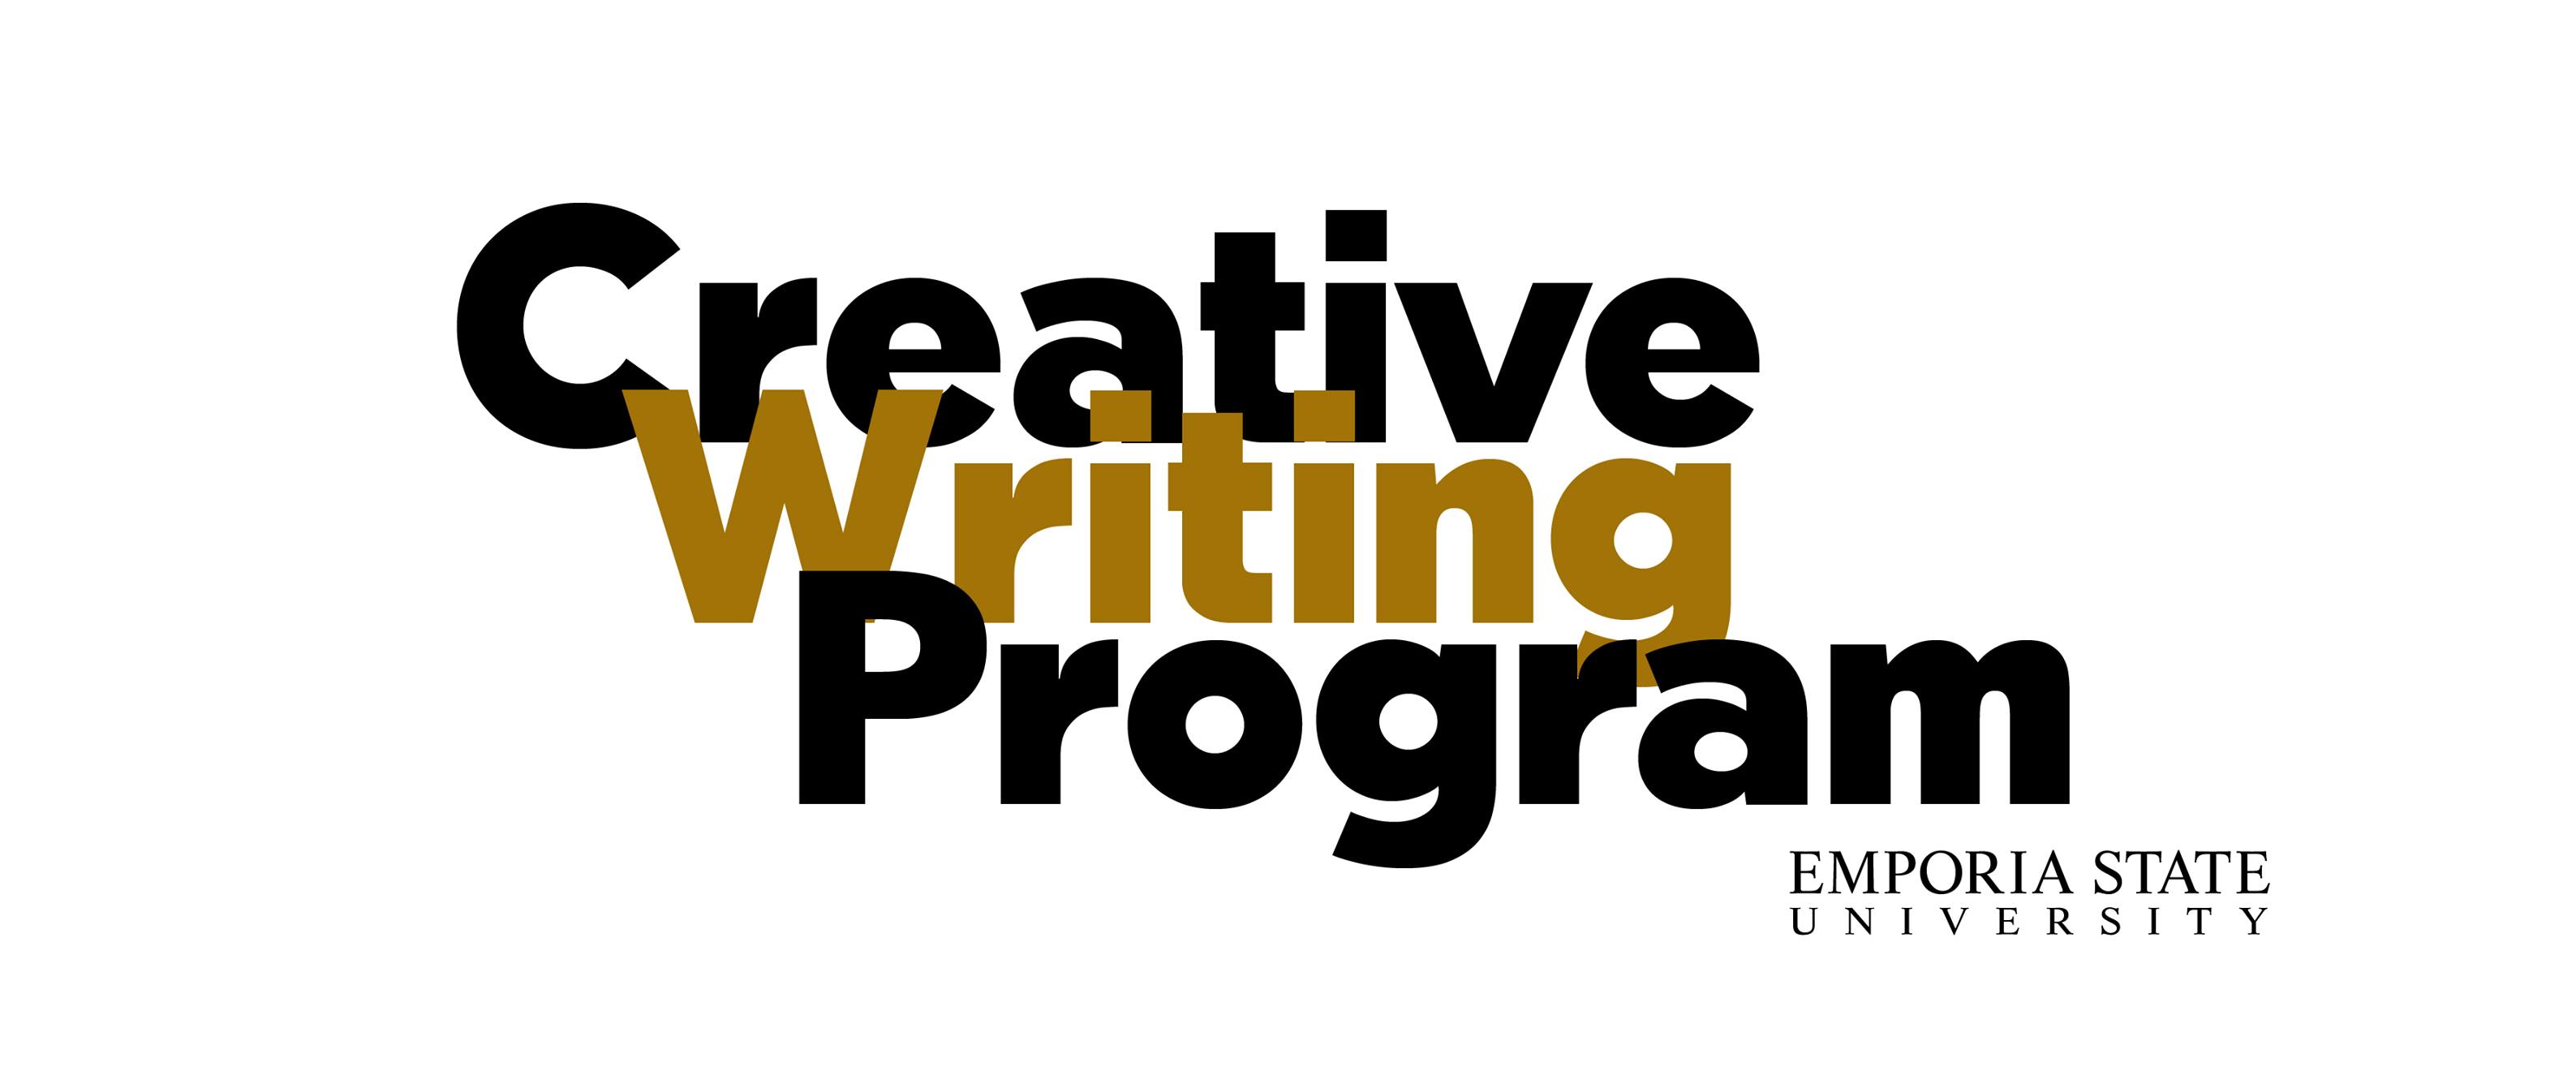 Creative Writing Program at Emporia State University